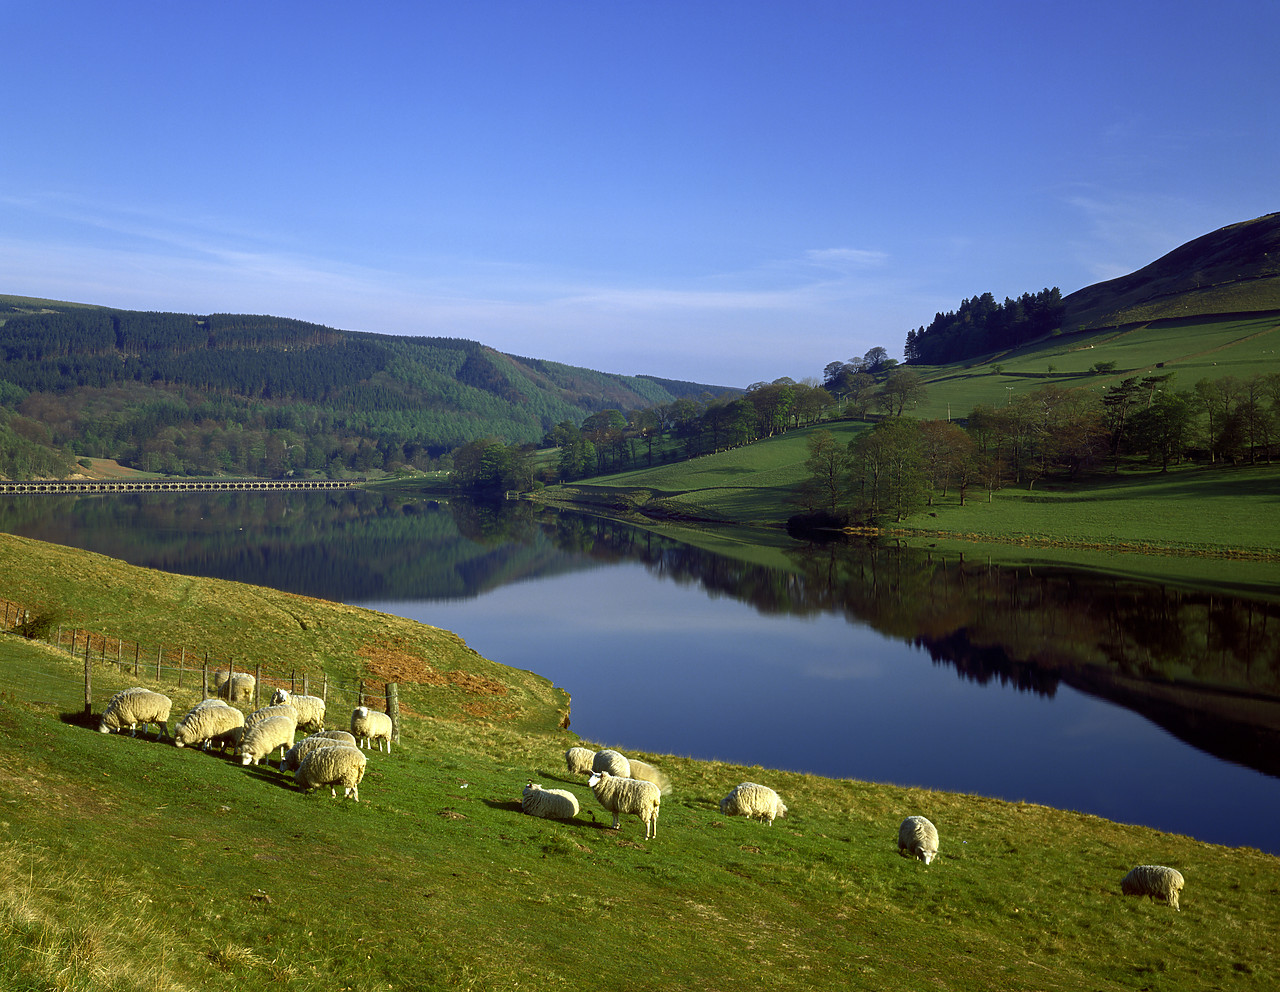 #913366-1 - Ladybower Reservoir & Grazing Sheep, Peak District National Park, Derbyshire, England